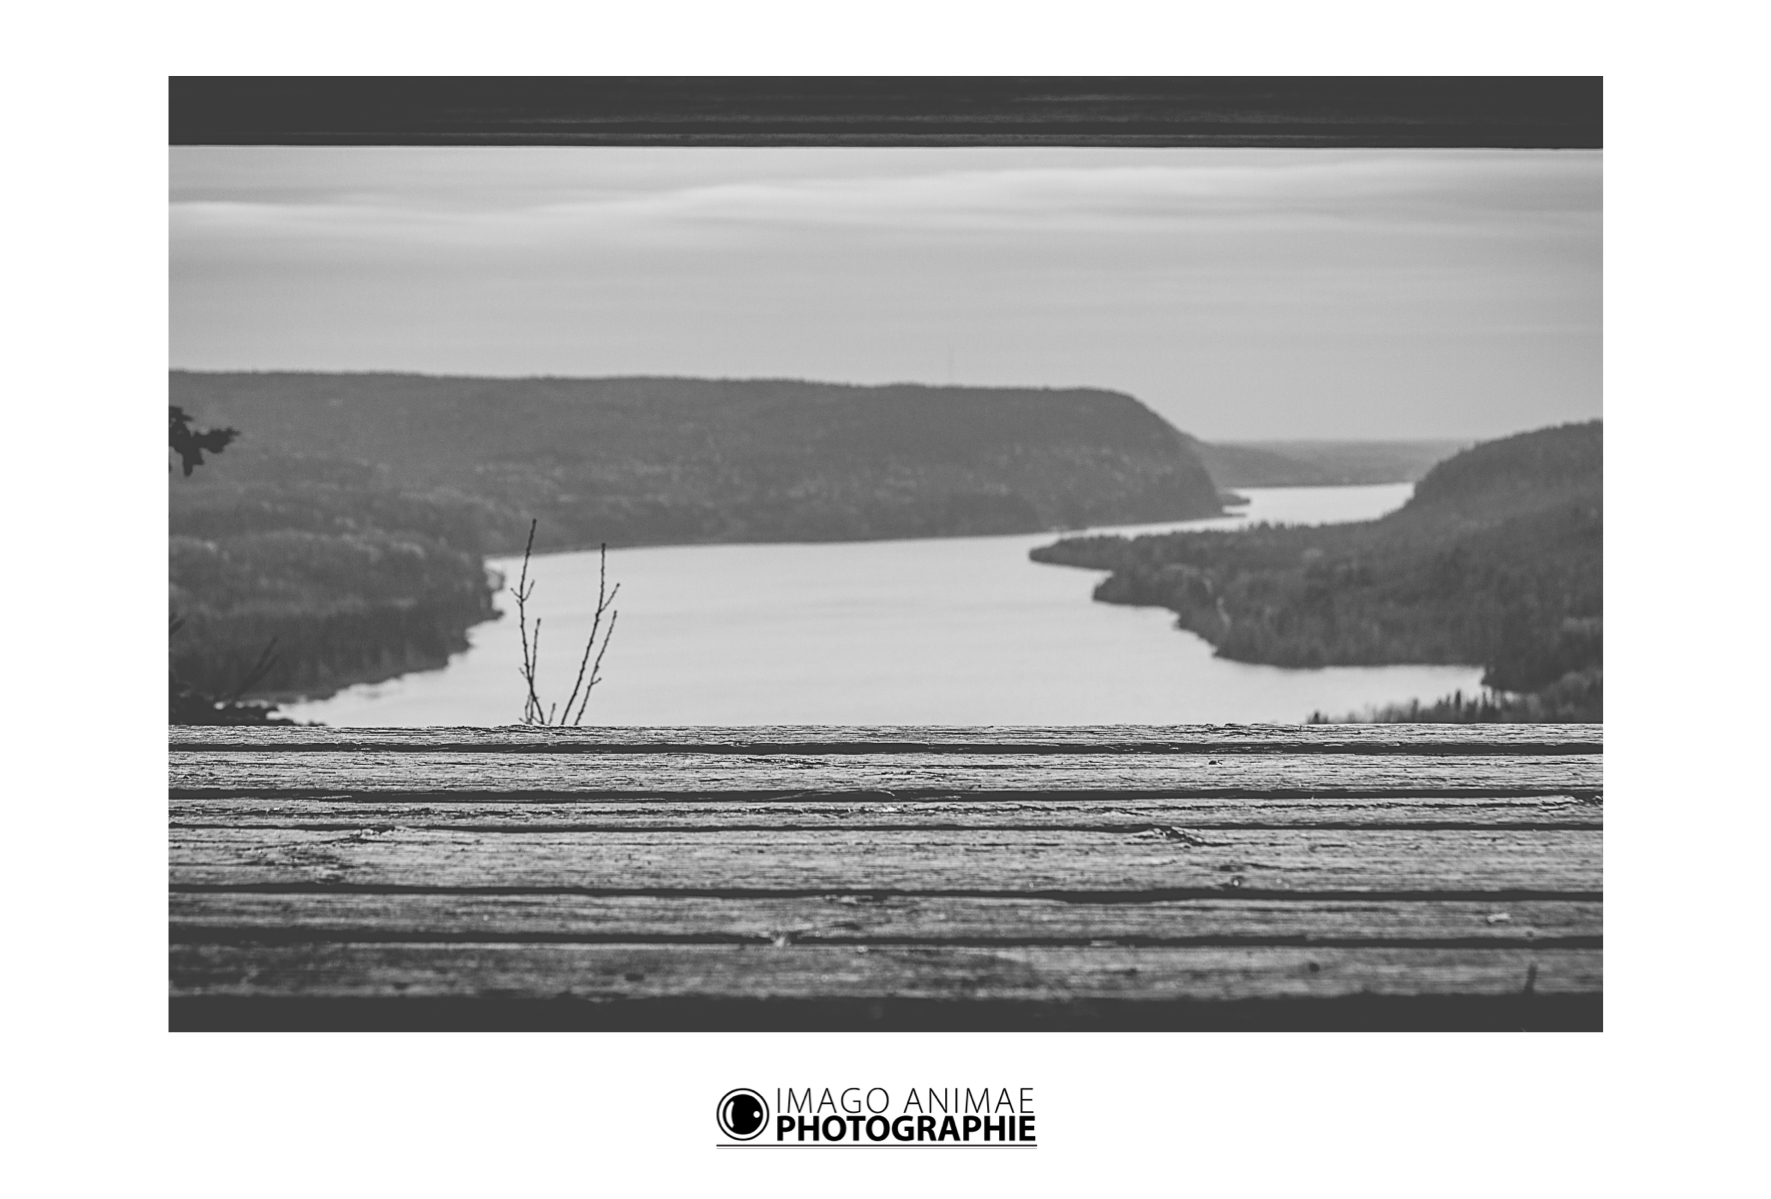 Christophe CAMPS - Imago Animae photographie - Voyage Canada Québec